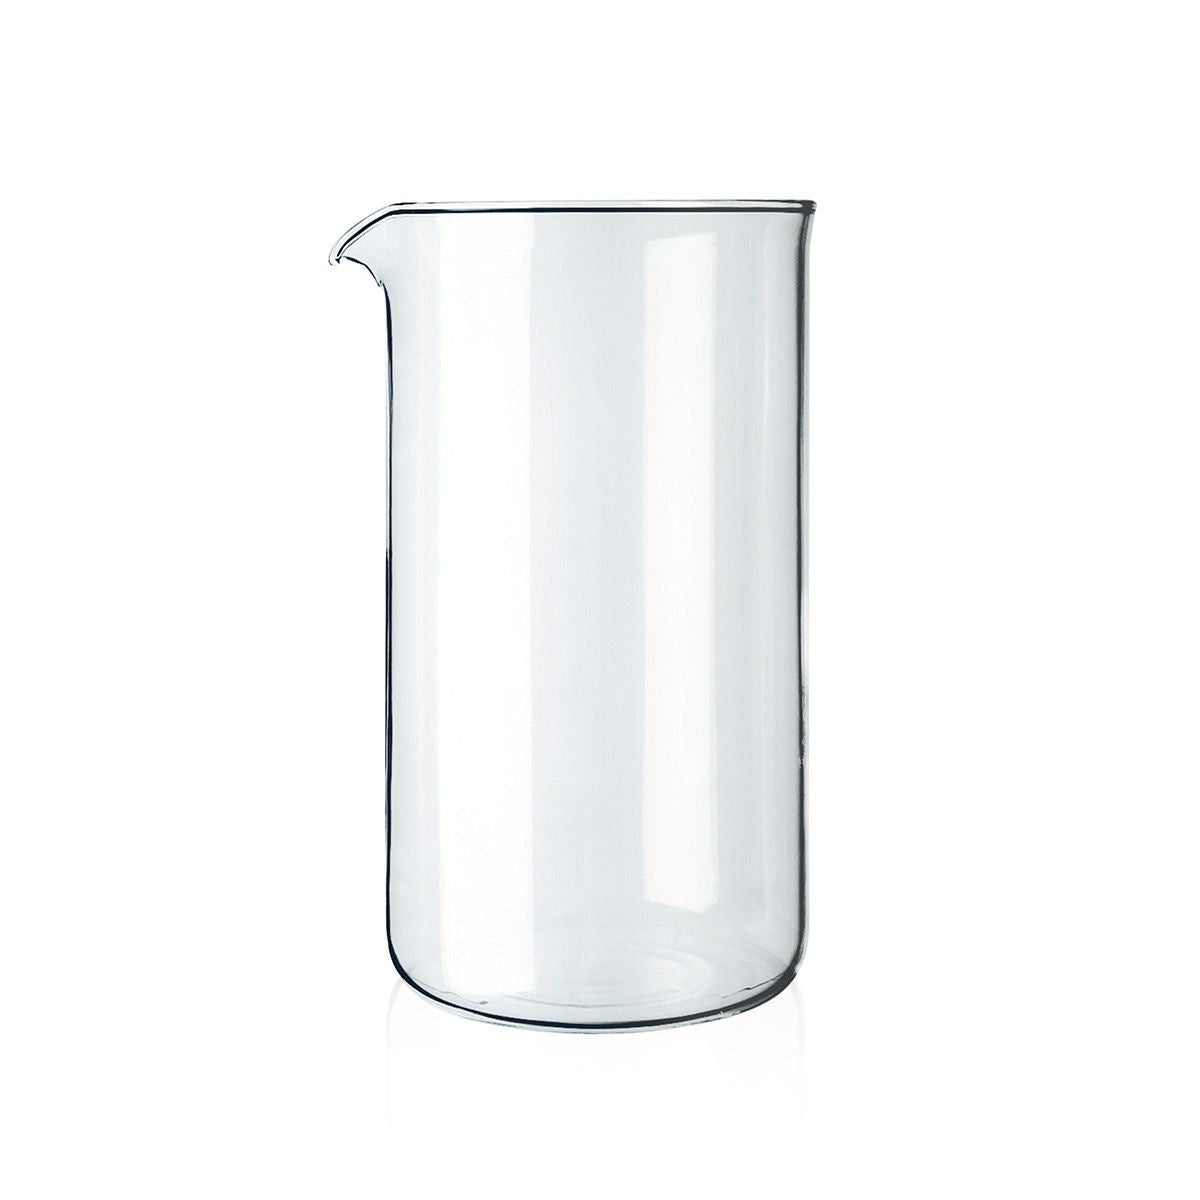 Bodum Spare Glass Beaker for 8 Cup Coffee Press